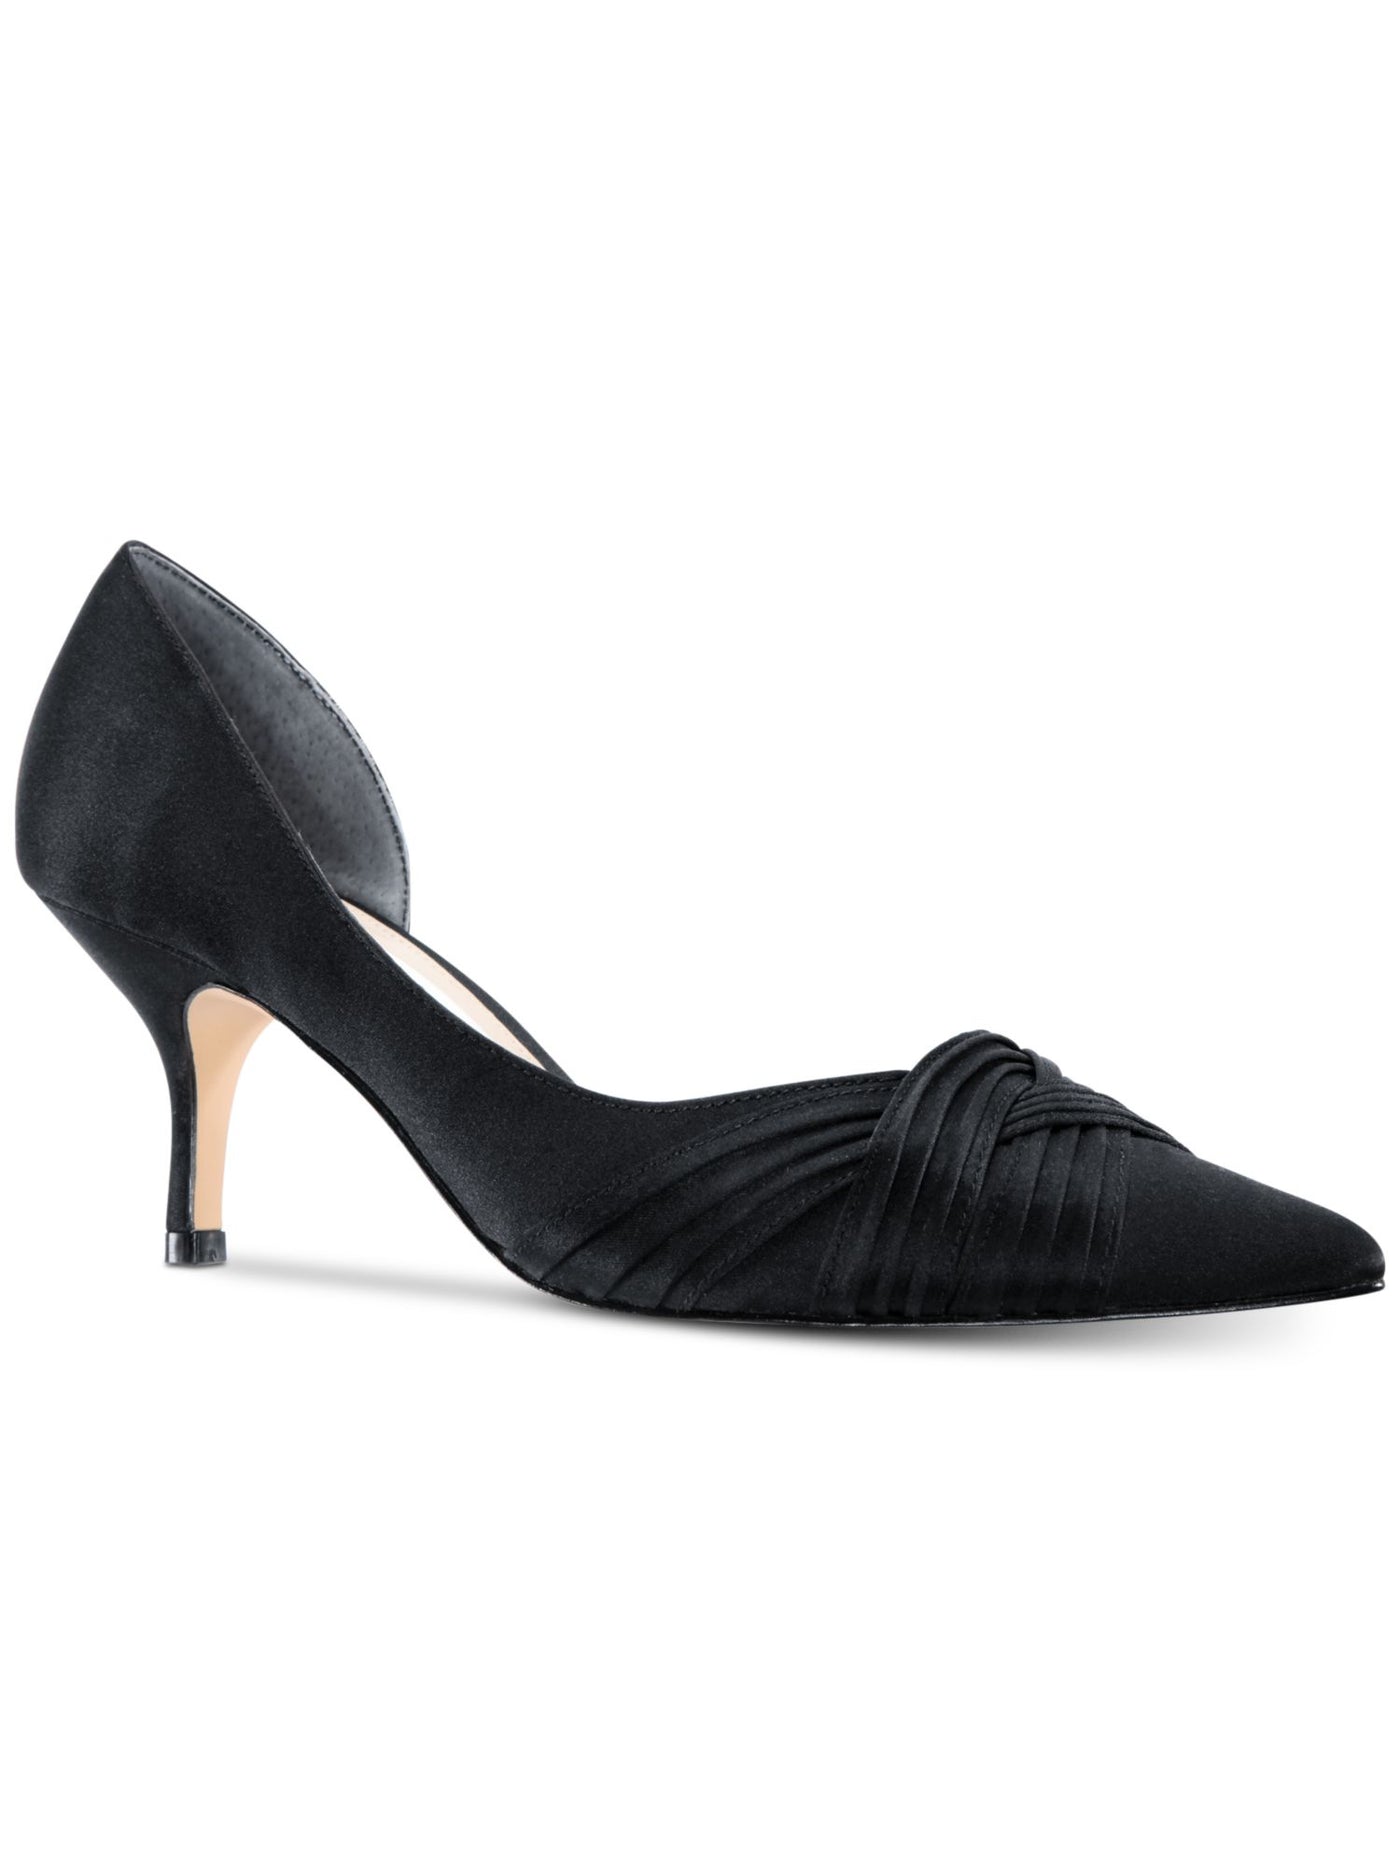 NINA Womens Black D'orsay Style Pleated Blakely Pointed Toe Kitten Heel Slip On Dress Pumps Shoes 6 W